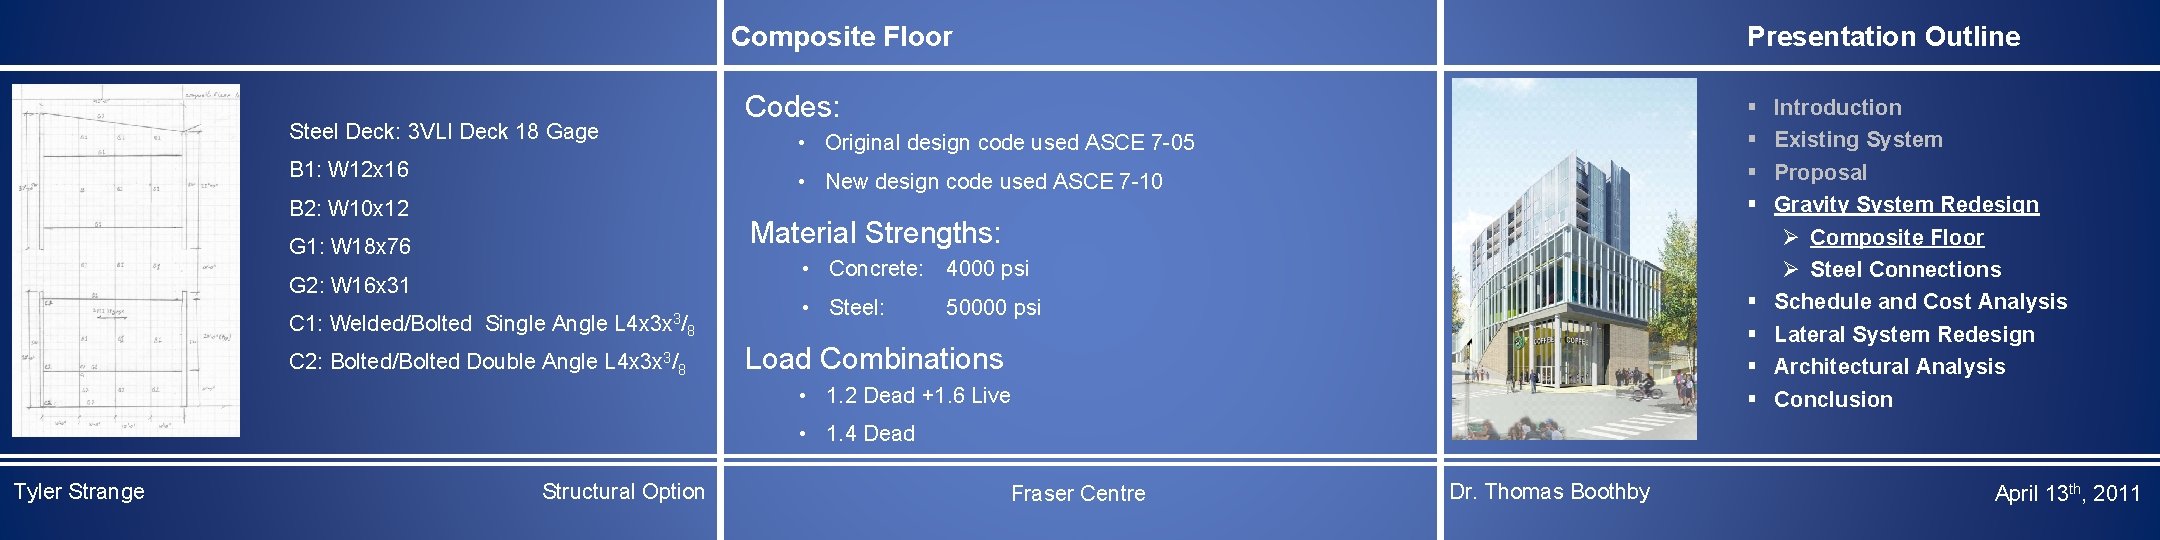 Presentation Outline Composite Floor Steel Deck: 3 VLI Deck 18 Gage B 1: W